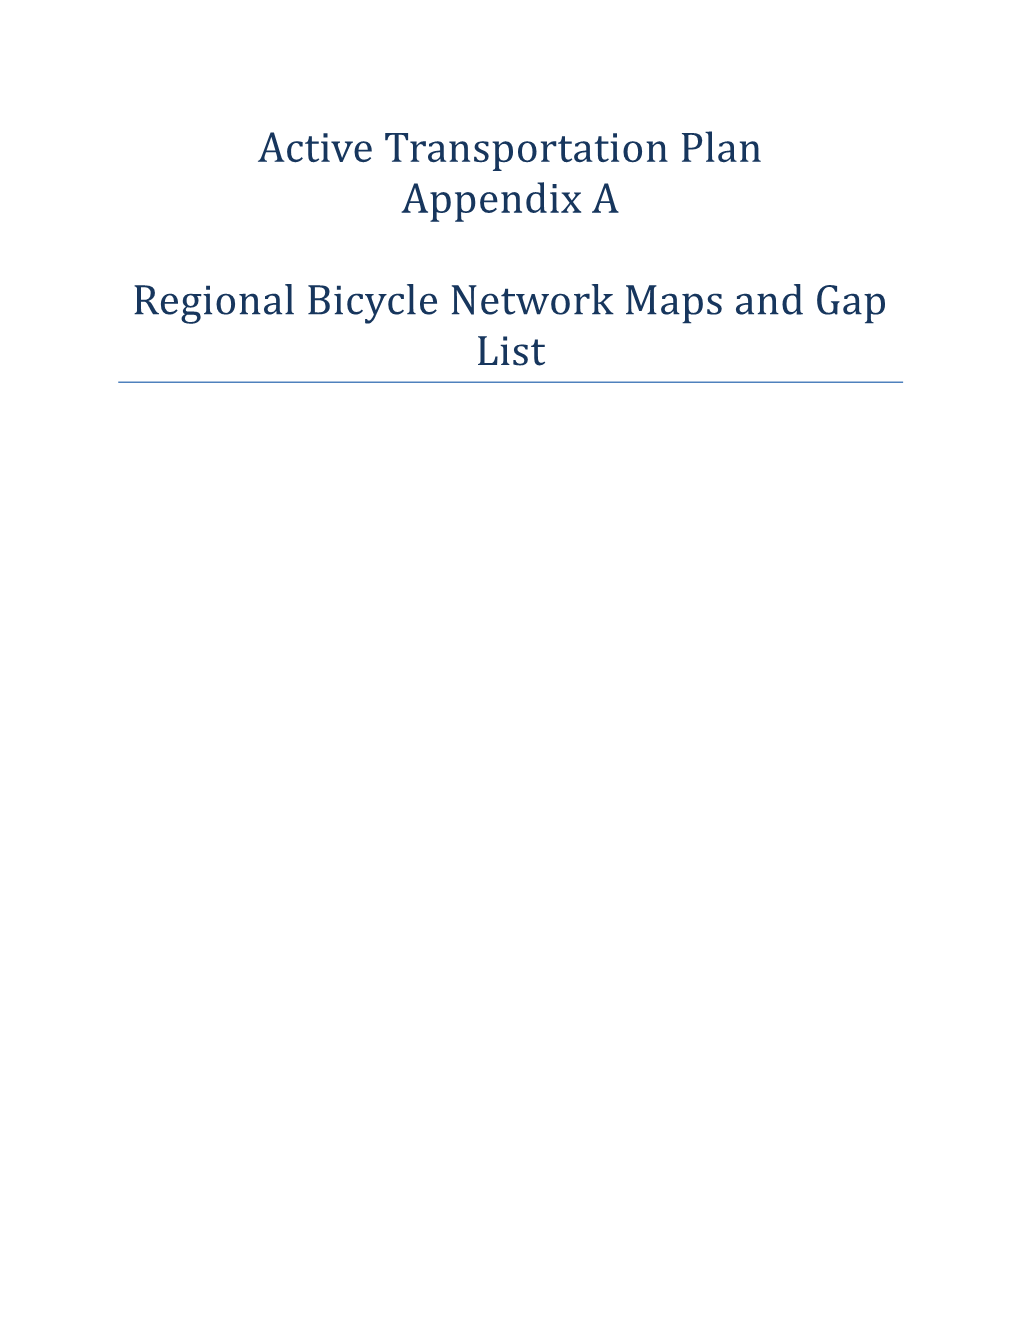 Active Transportation Plan Appendix a Regional Bicycle Network Maps